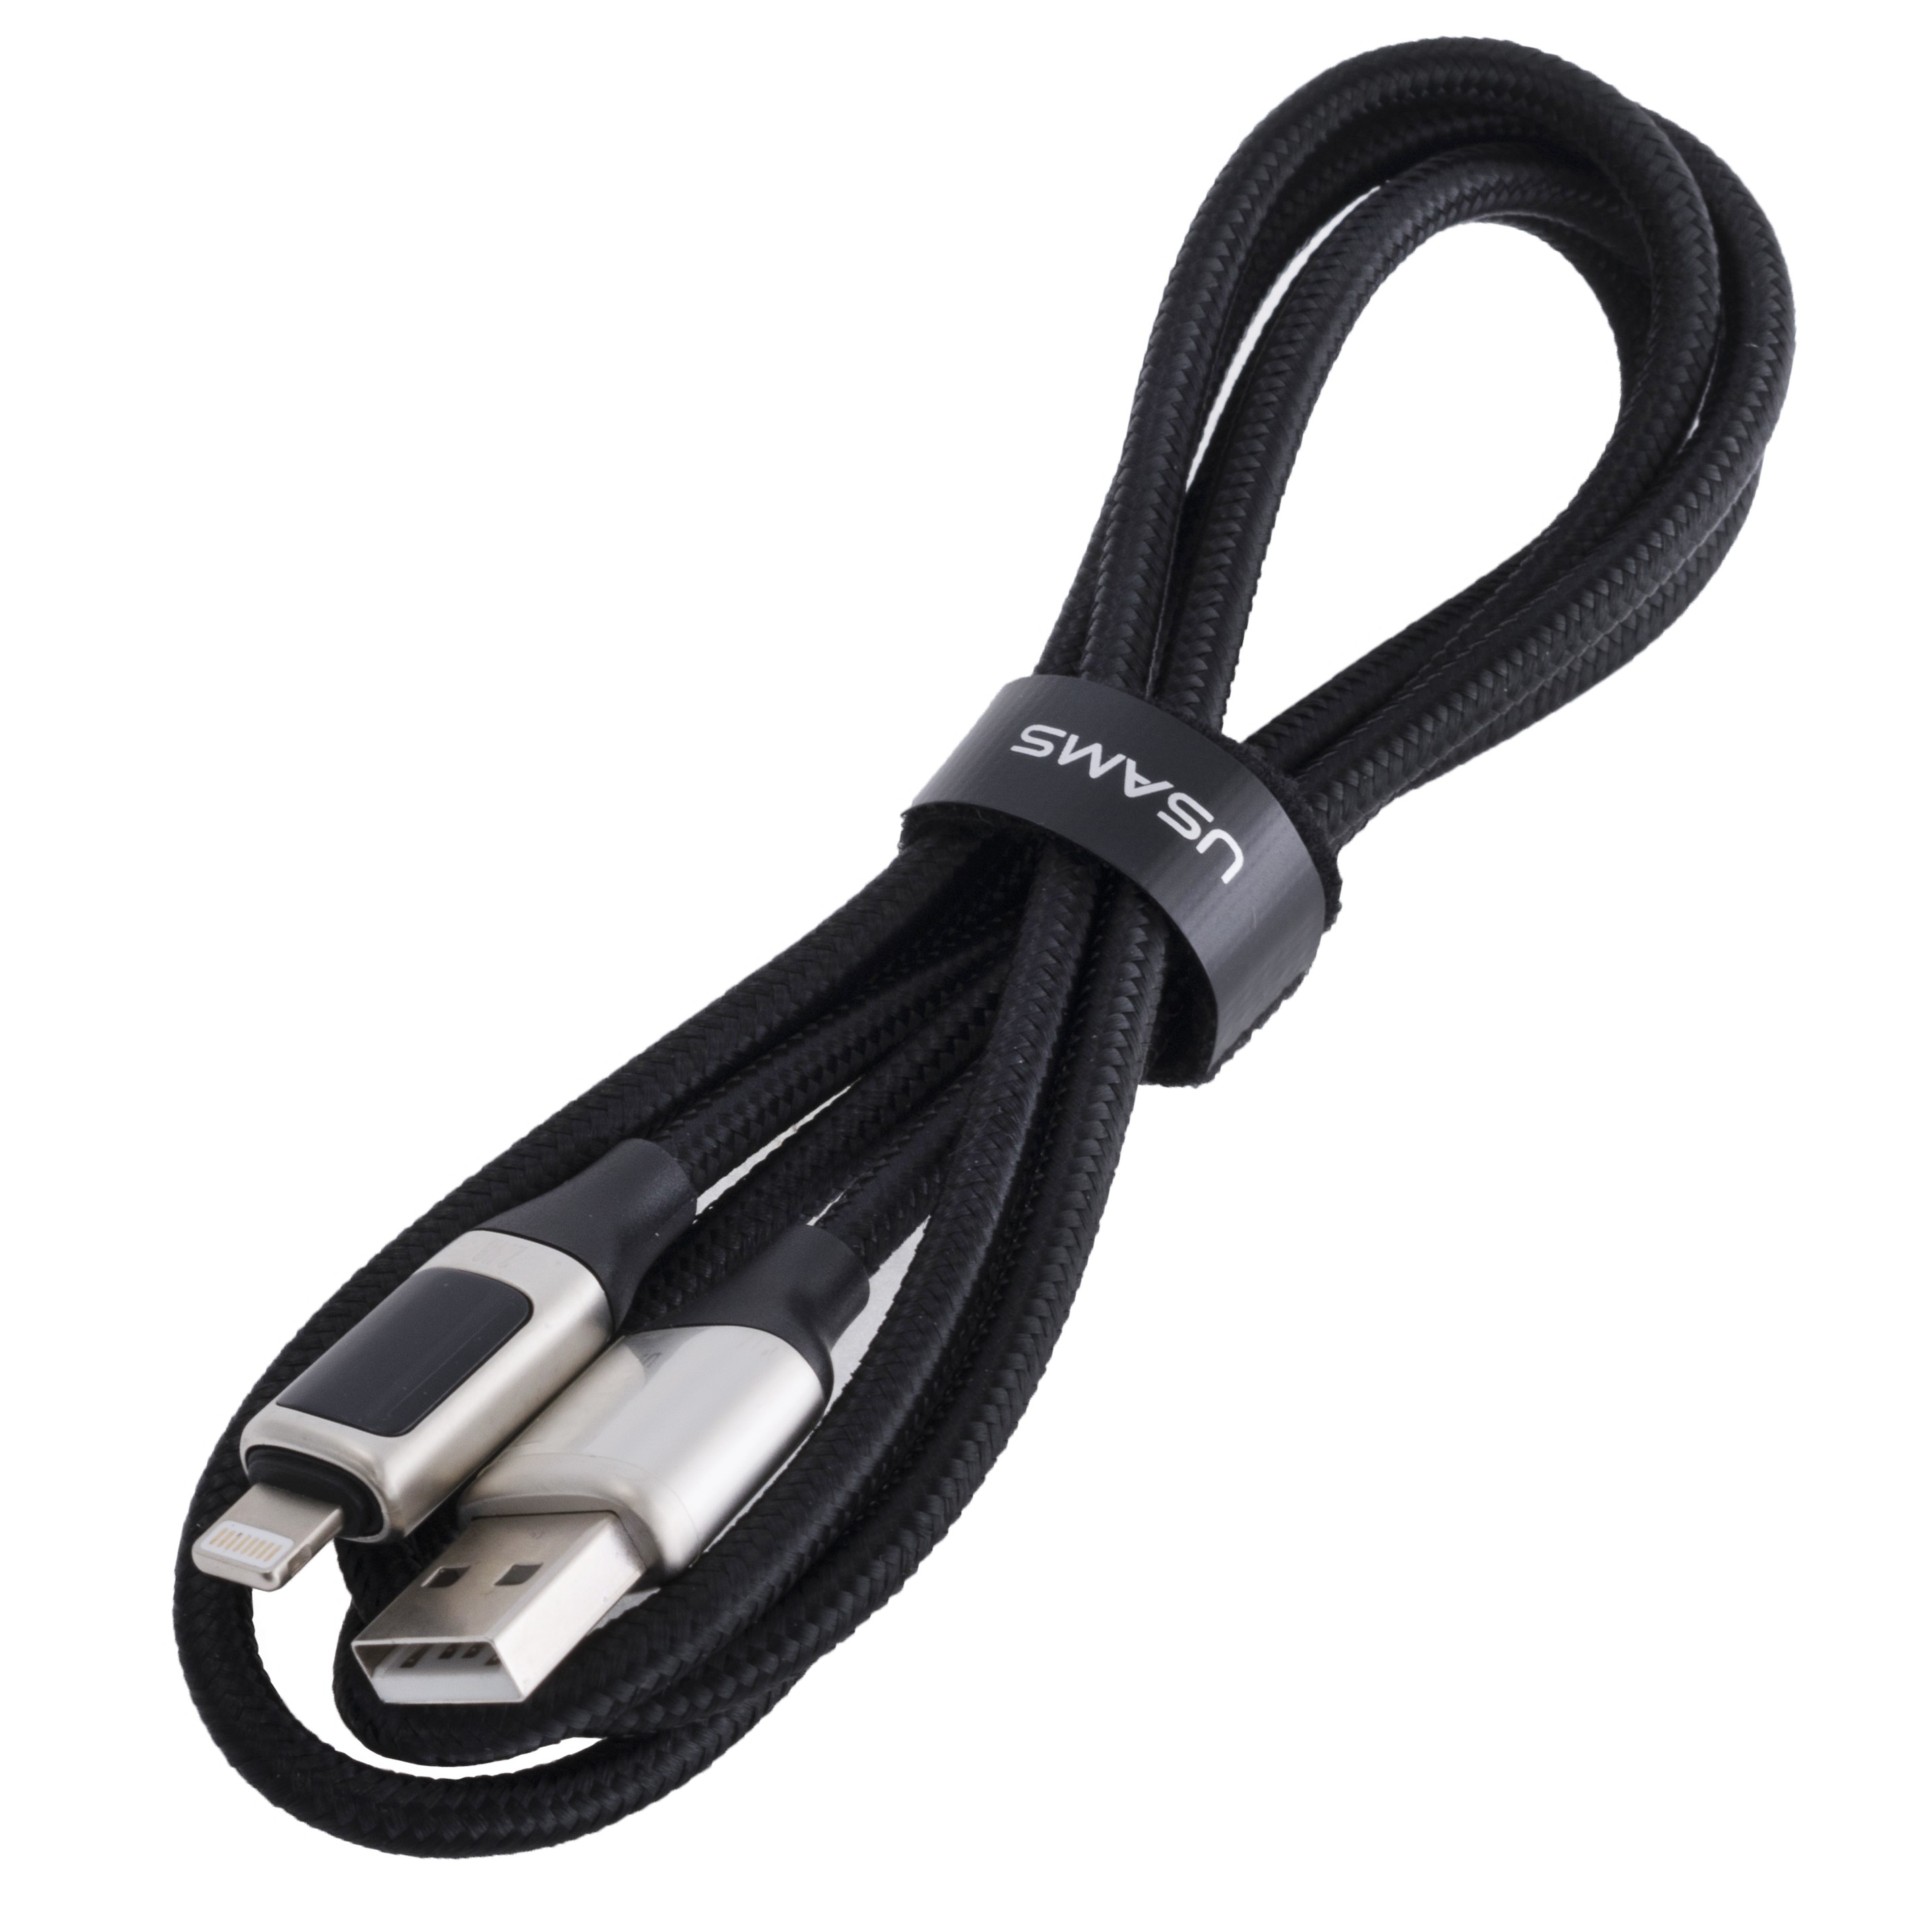 Кабель USB US-SJ543 U78 (USAMS) Lightning Digital Display Charging & Data Cable (USAMS) 1.2м білий